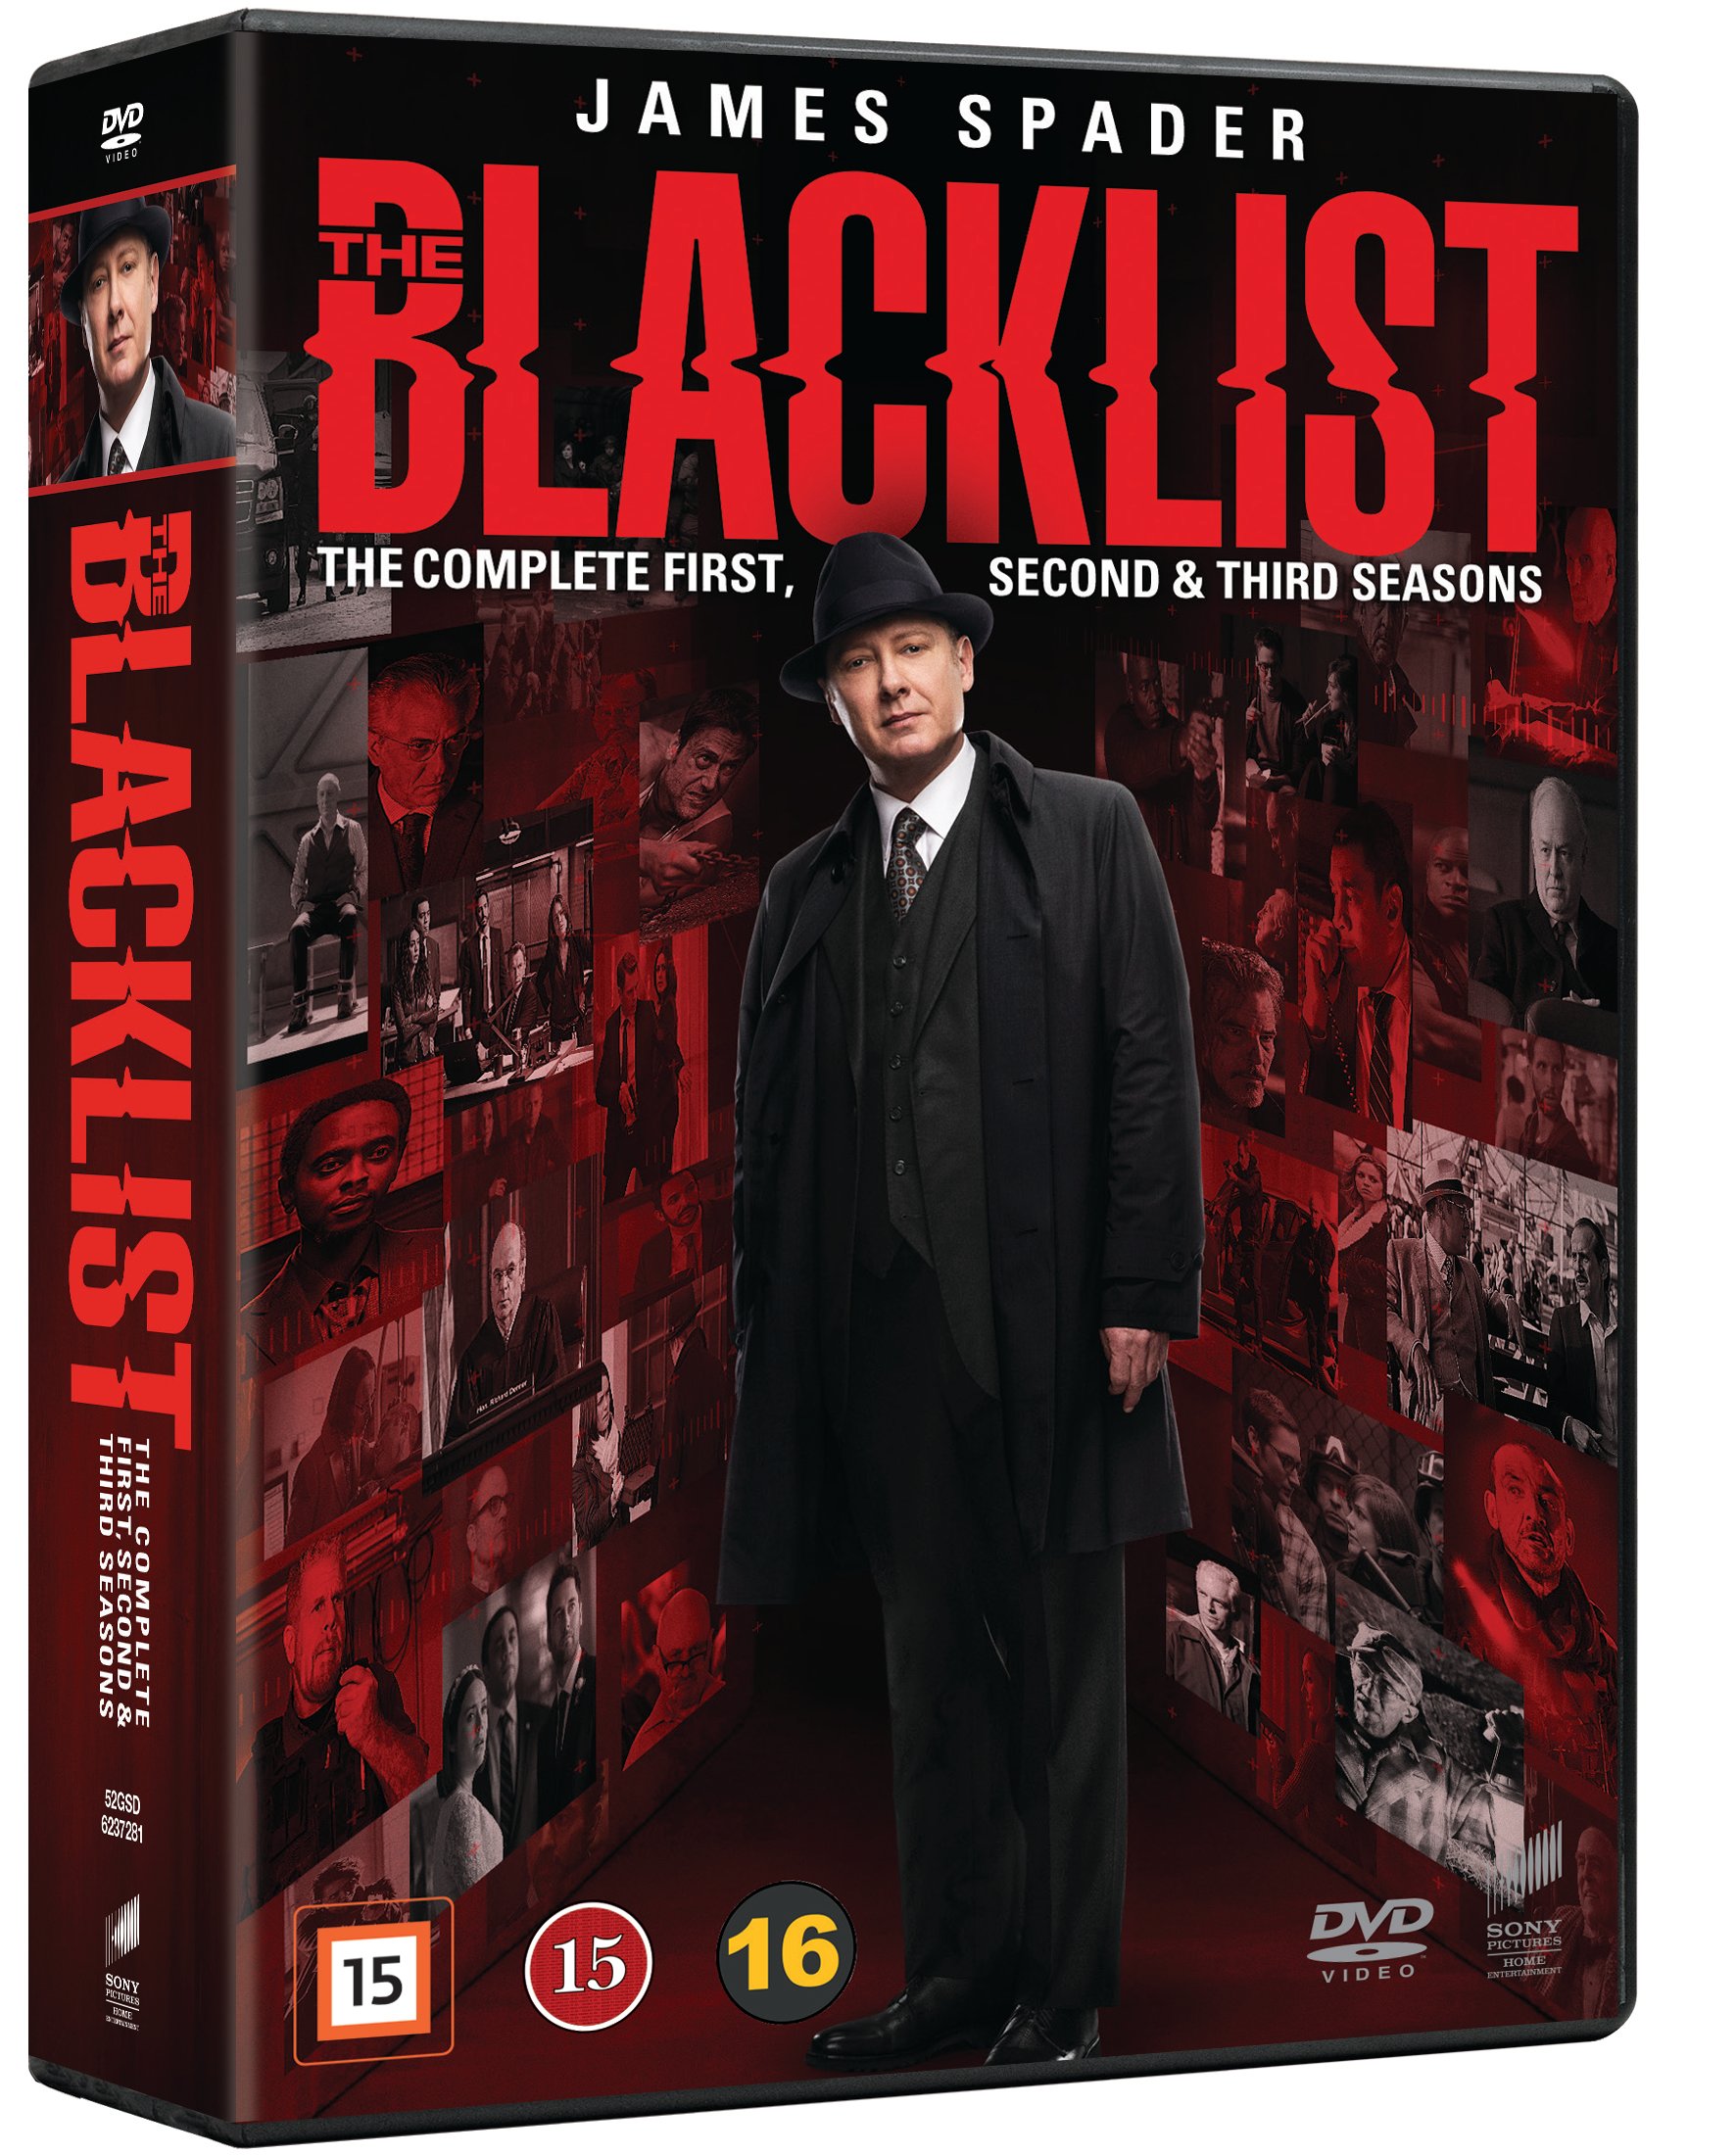 the blacklist season 3 complete series torrent download